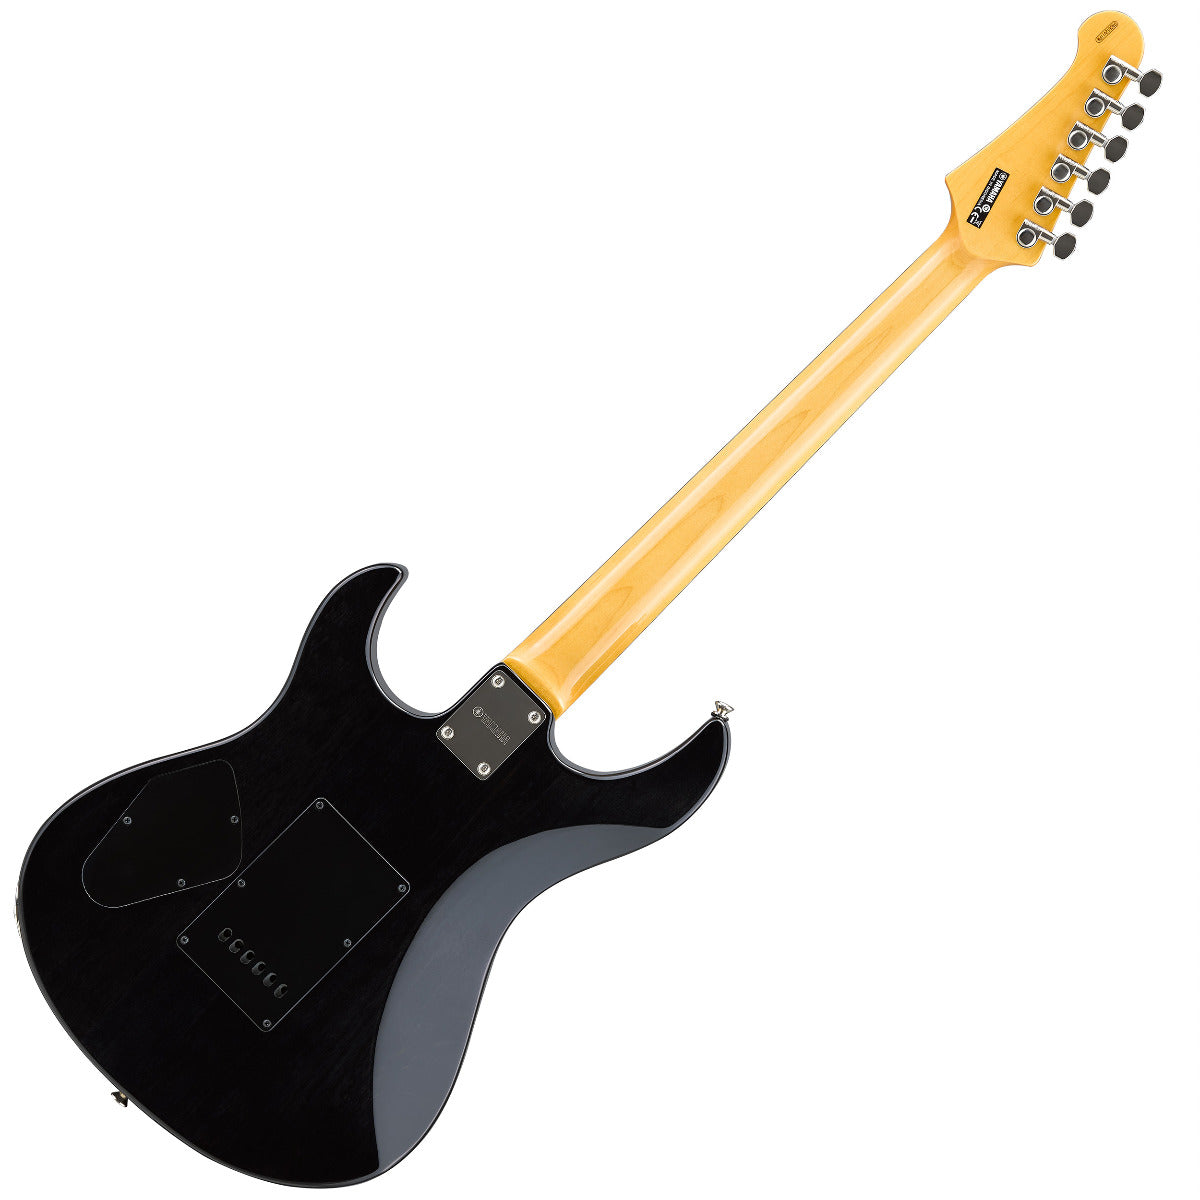 Yamaha Pacifica PAC612VIIFM Electric Guitar - Black